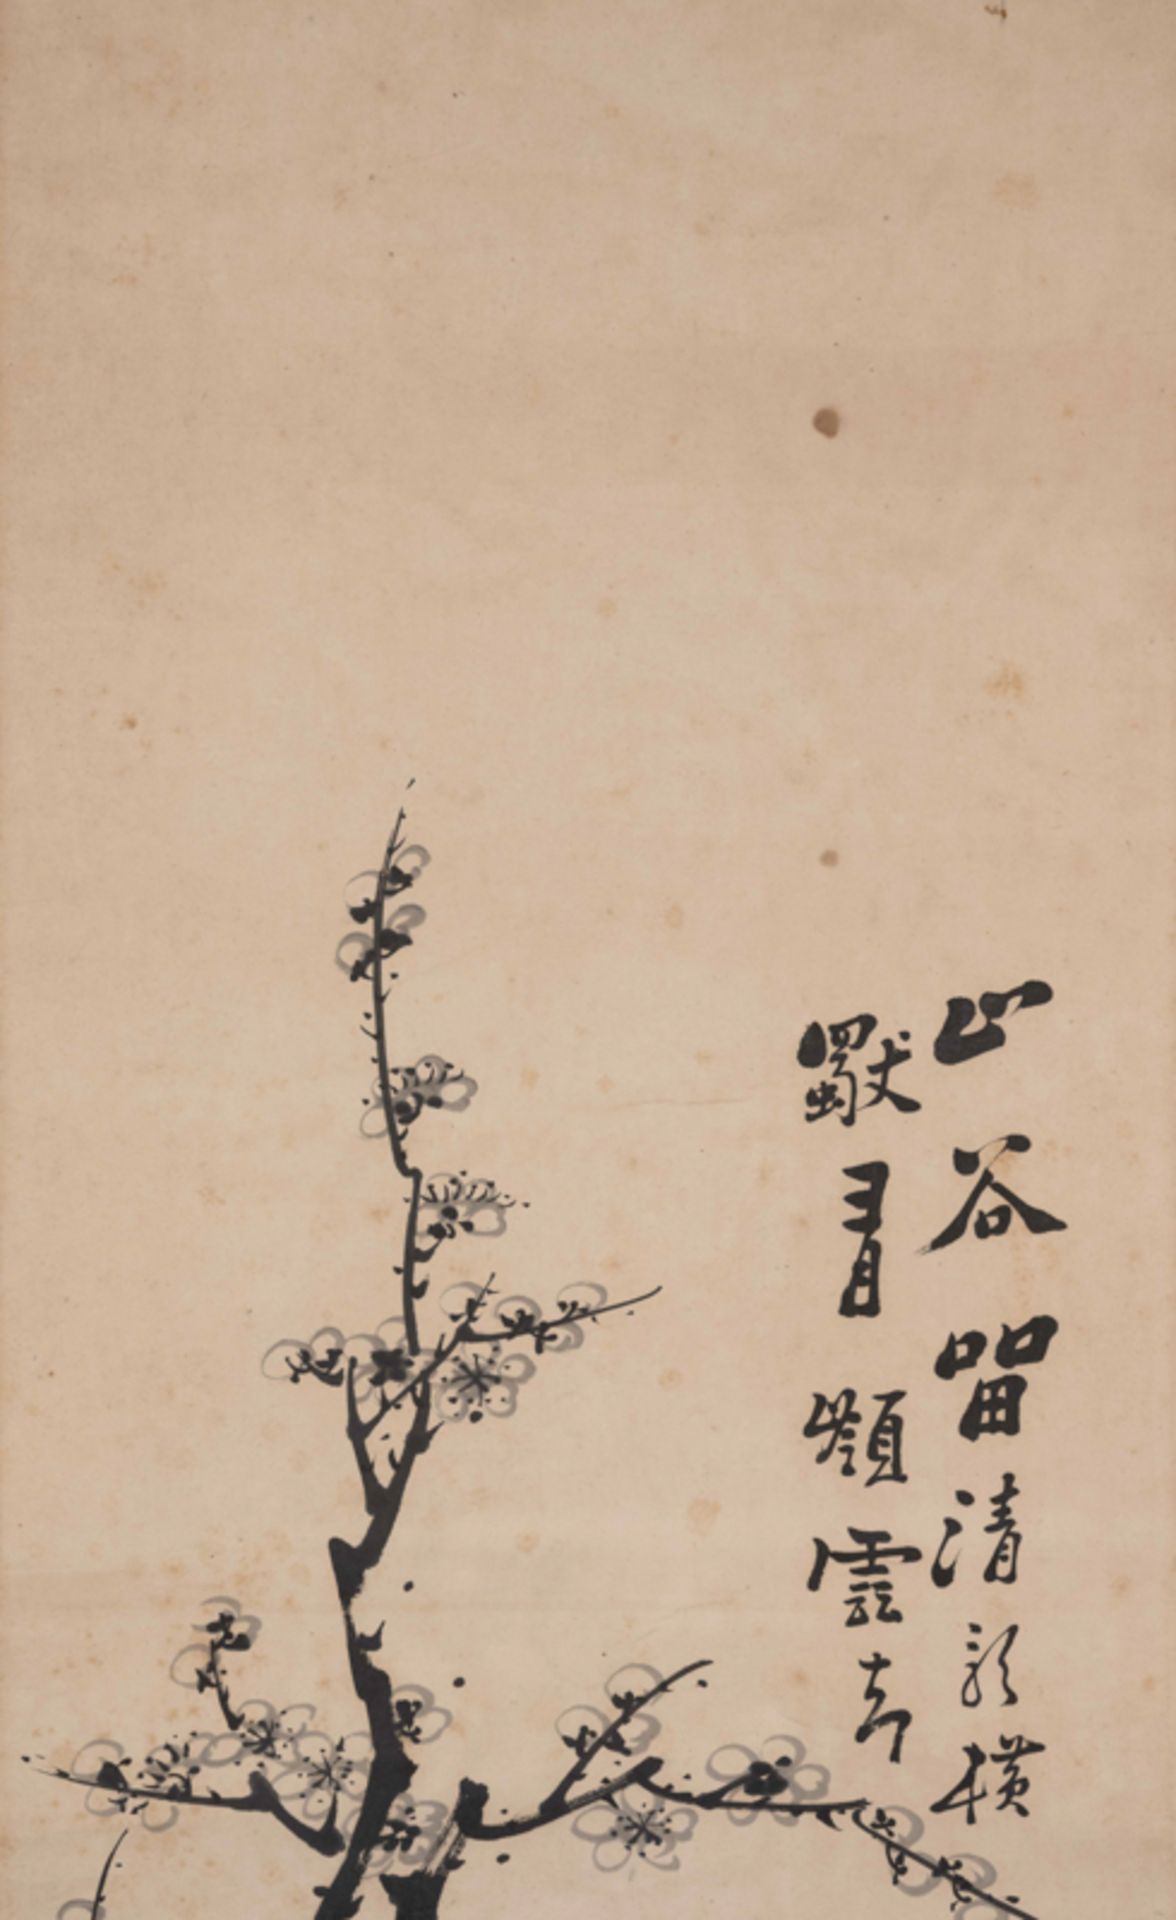 ZHENG BANQIAO (1693-1766), PLUM BLOSSOM 鄭板橋 墨梅 - Image 3 of 11